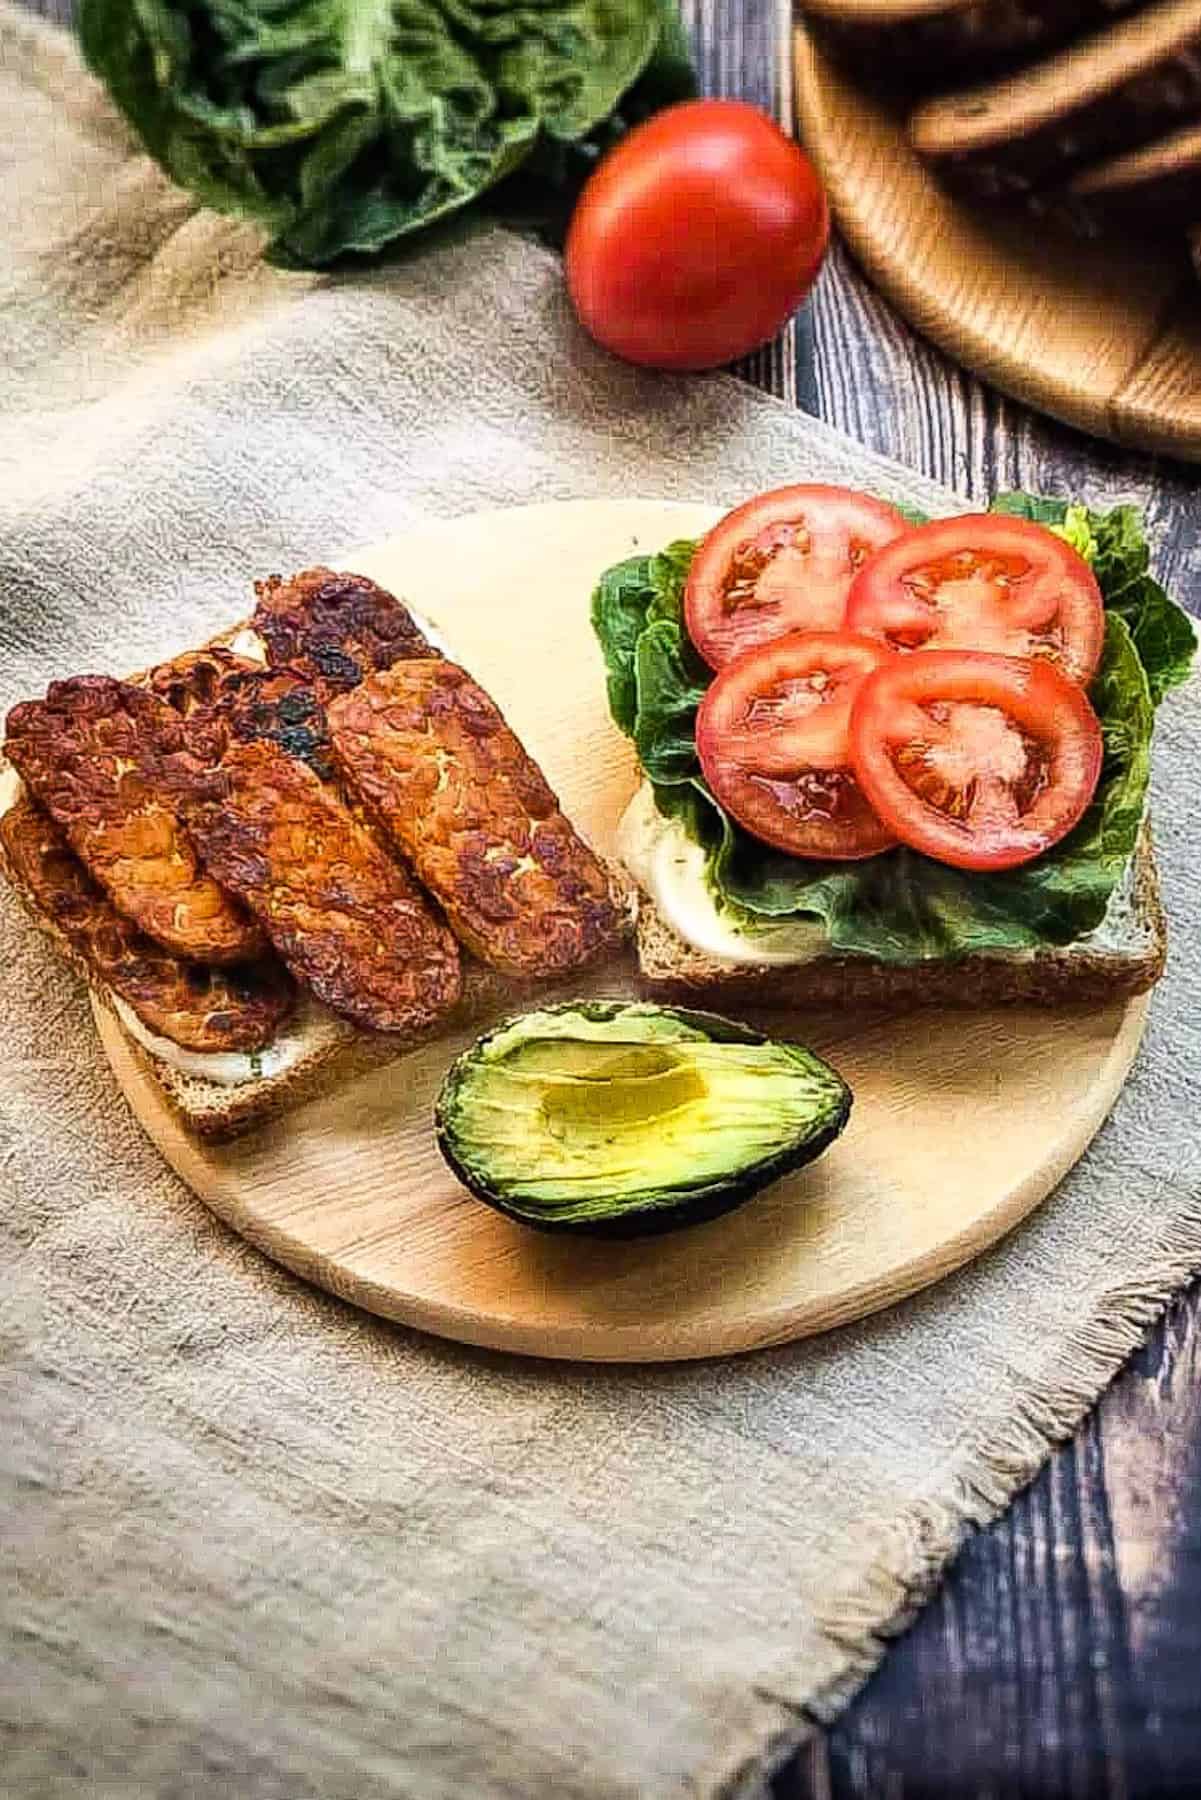 Vegan bacon on on sandwich.